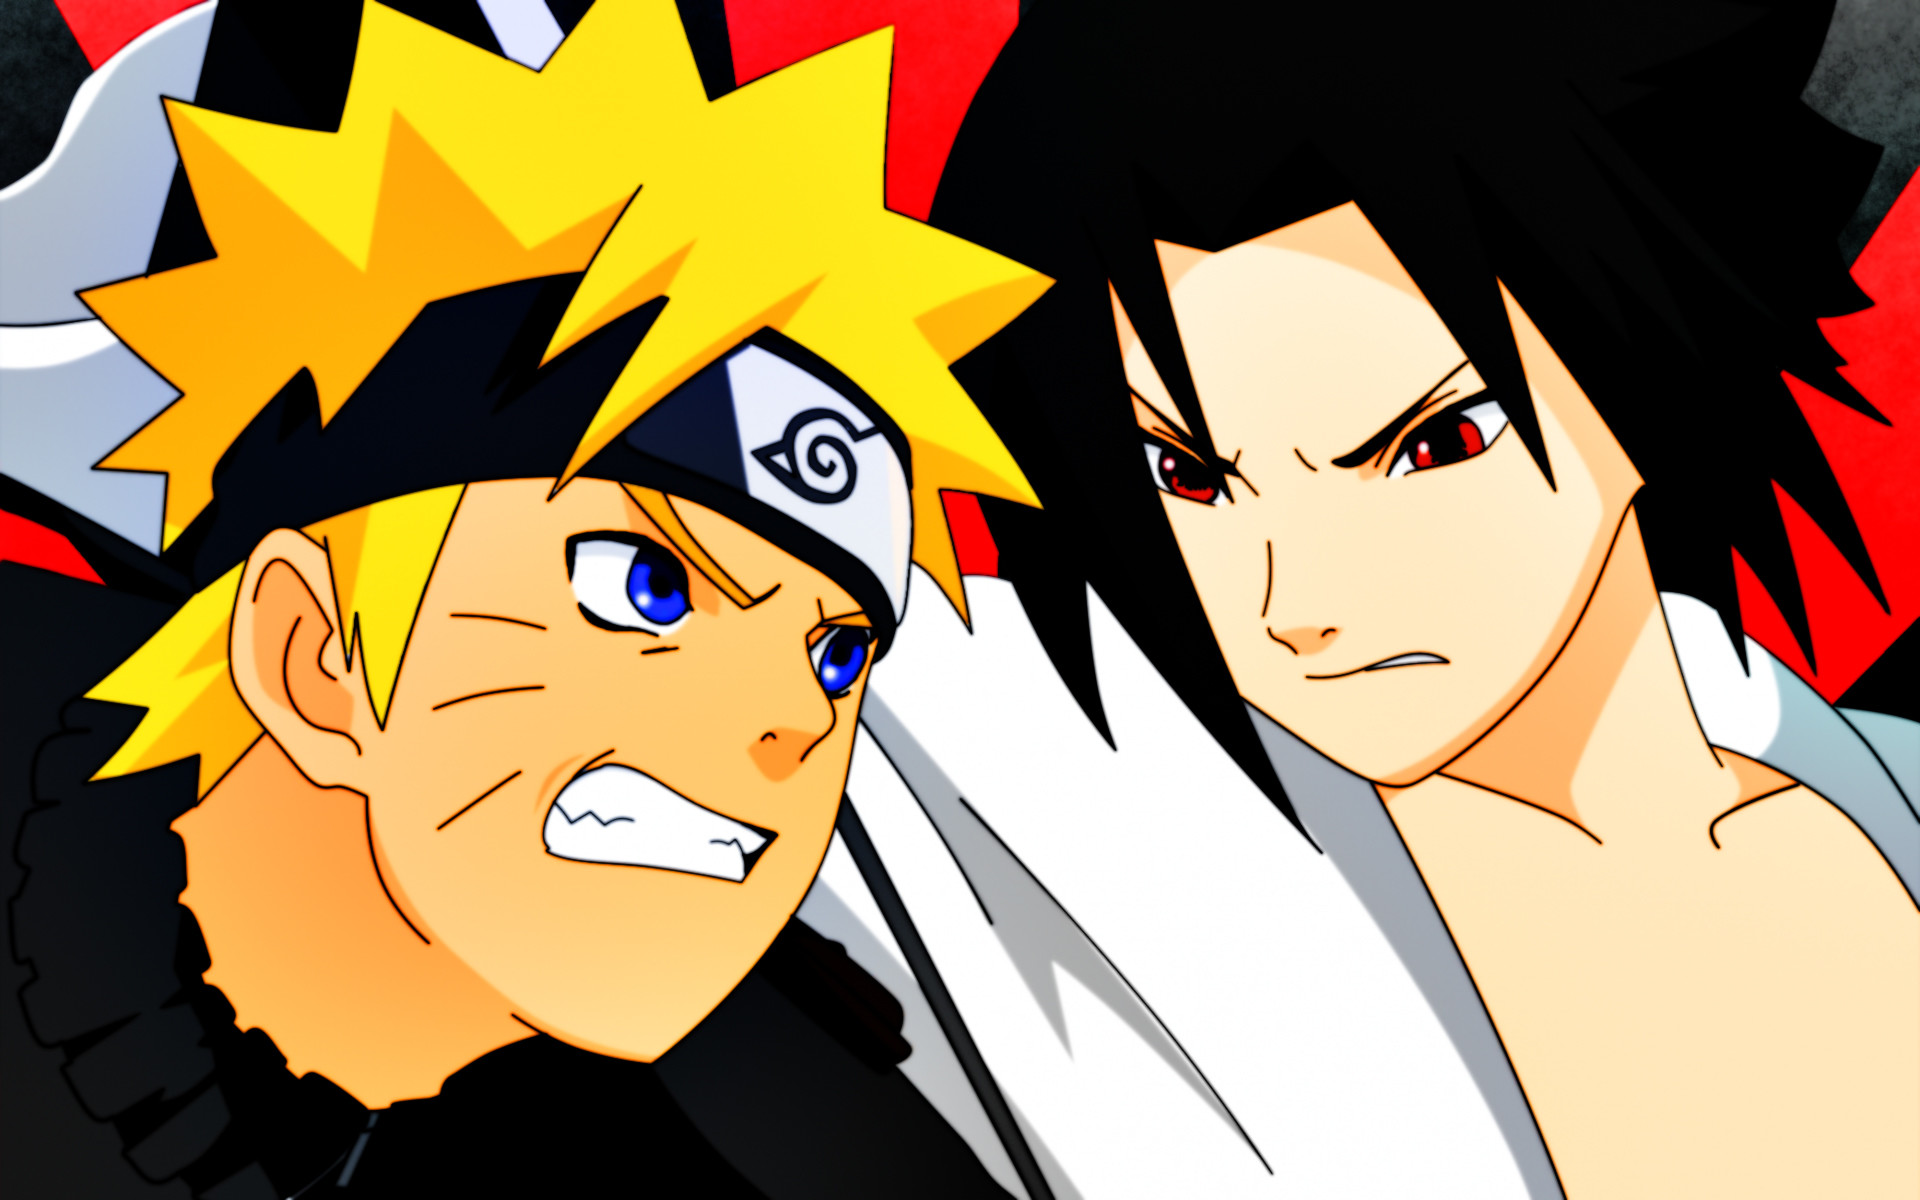 Naruto vs Sasuke Fighting HD desktop wallpaper Widescreen 16001000 Imagenes De Naruto Y